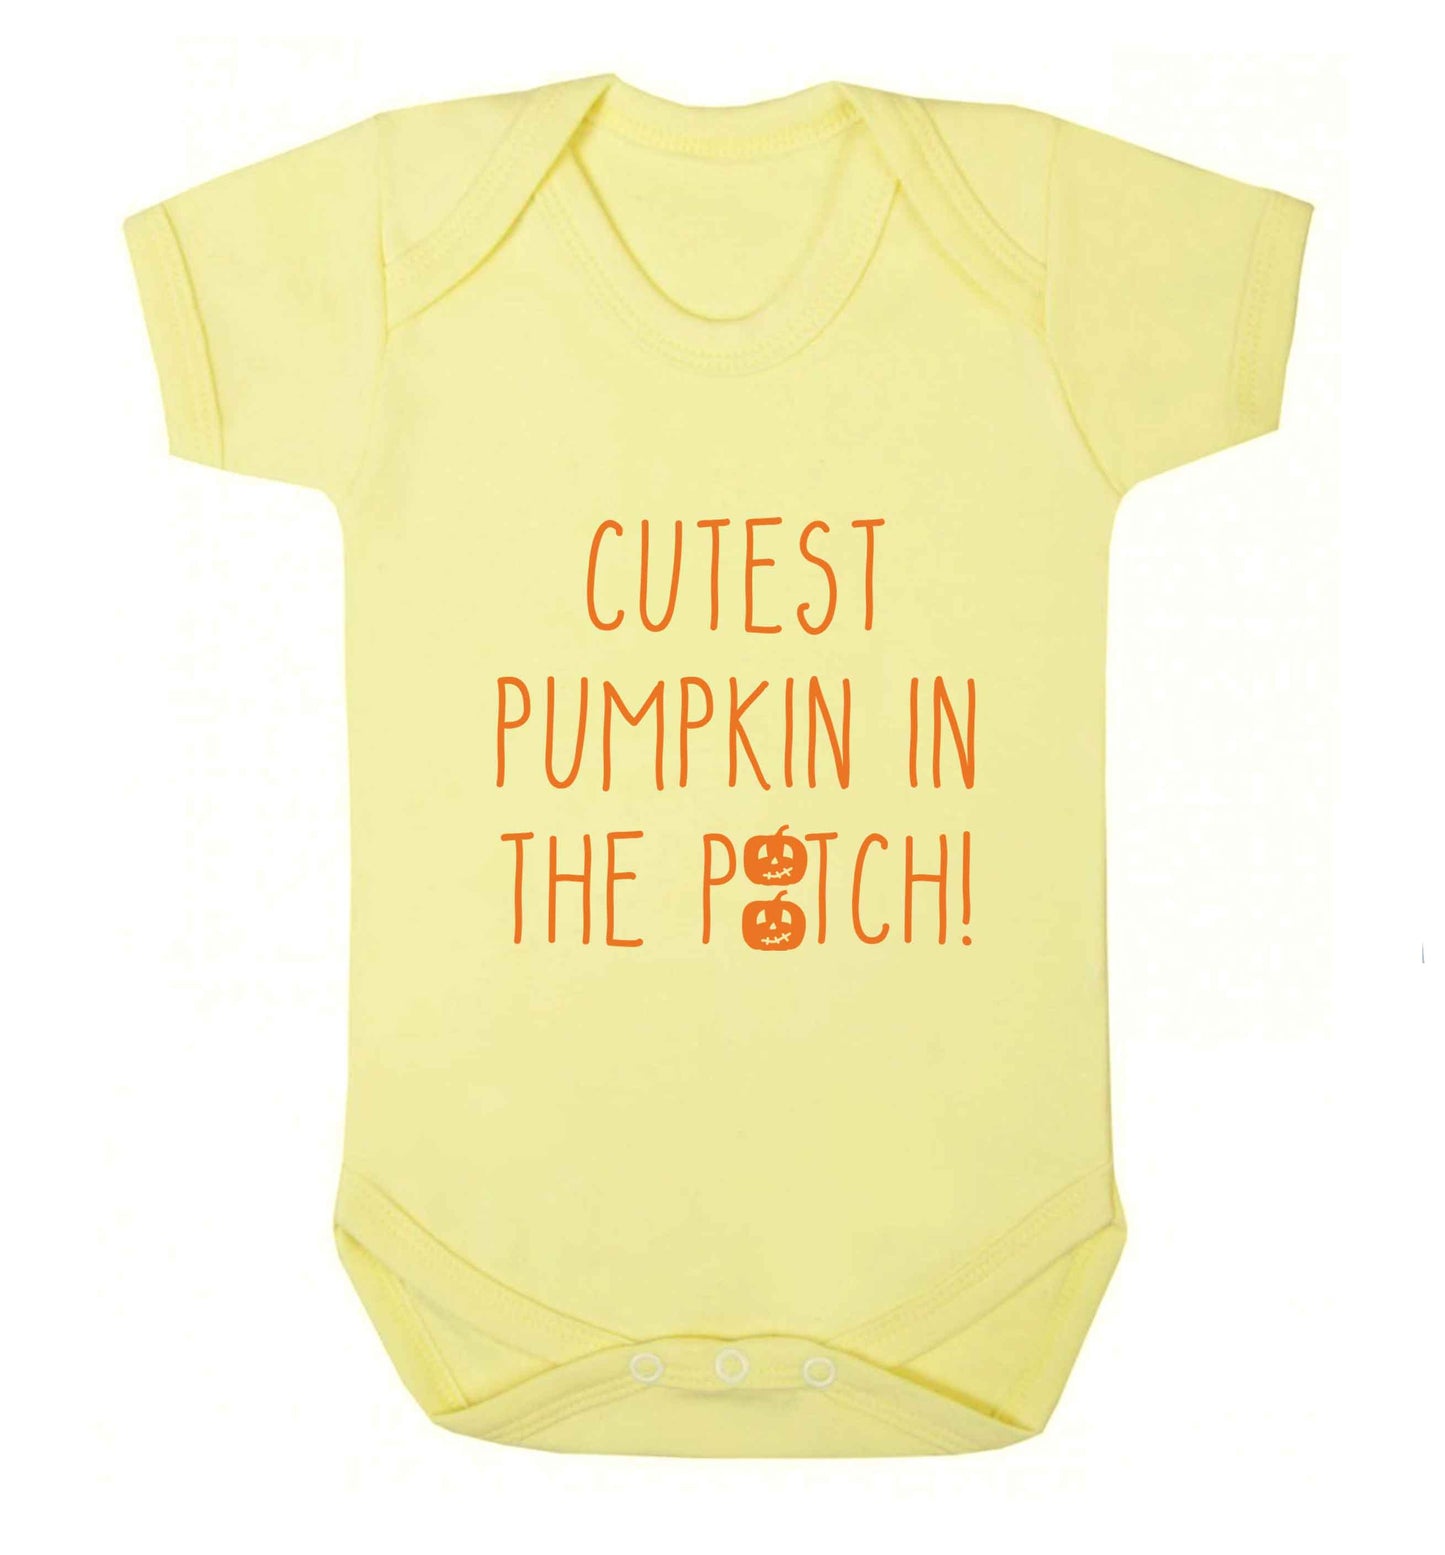 Calm Pumpkin Season baby vest pale yellow 18-24 months